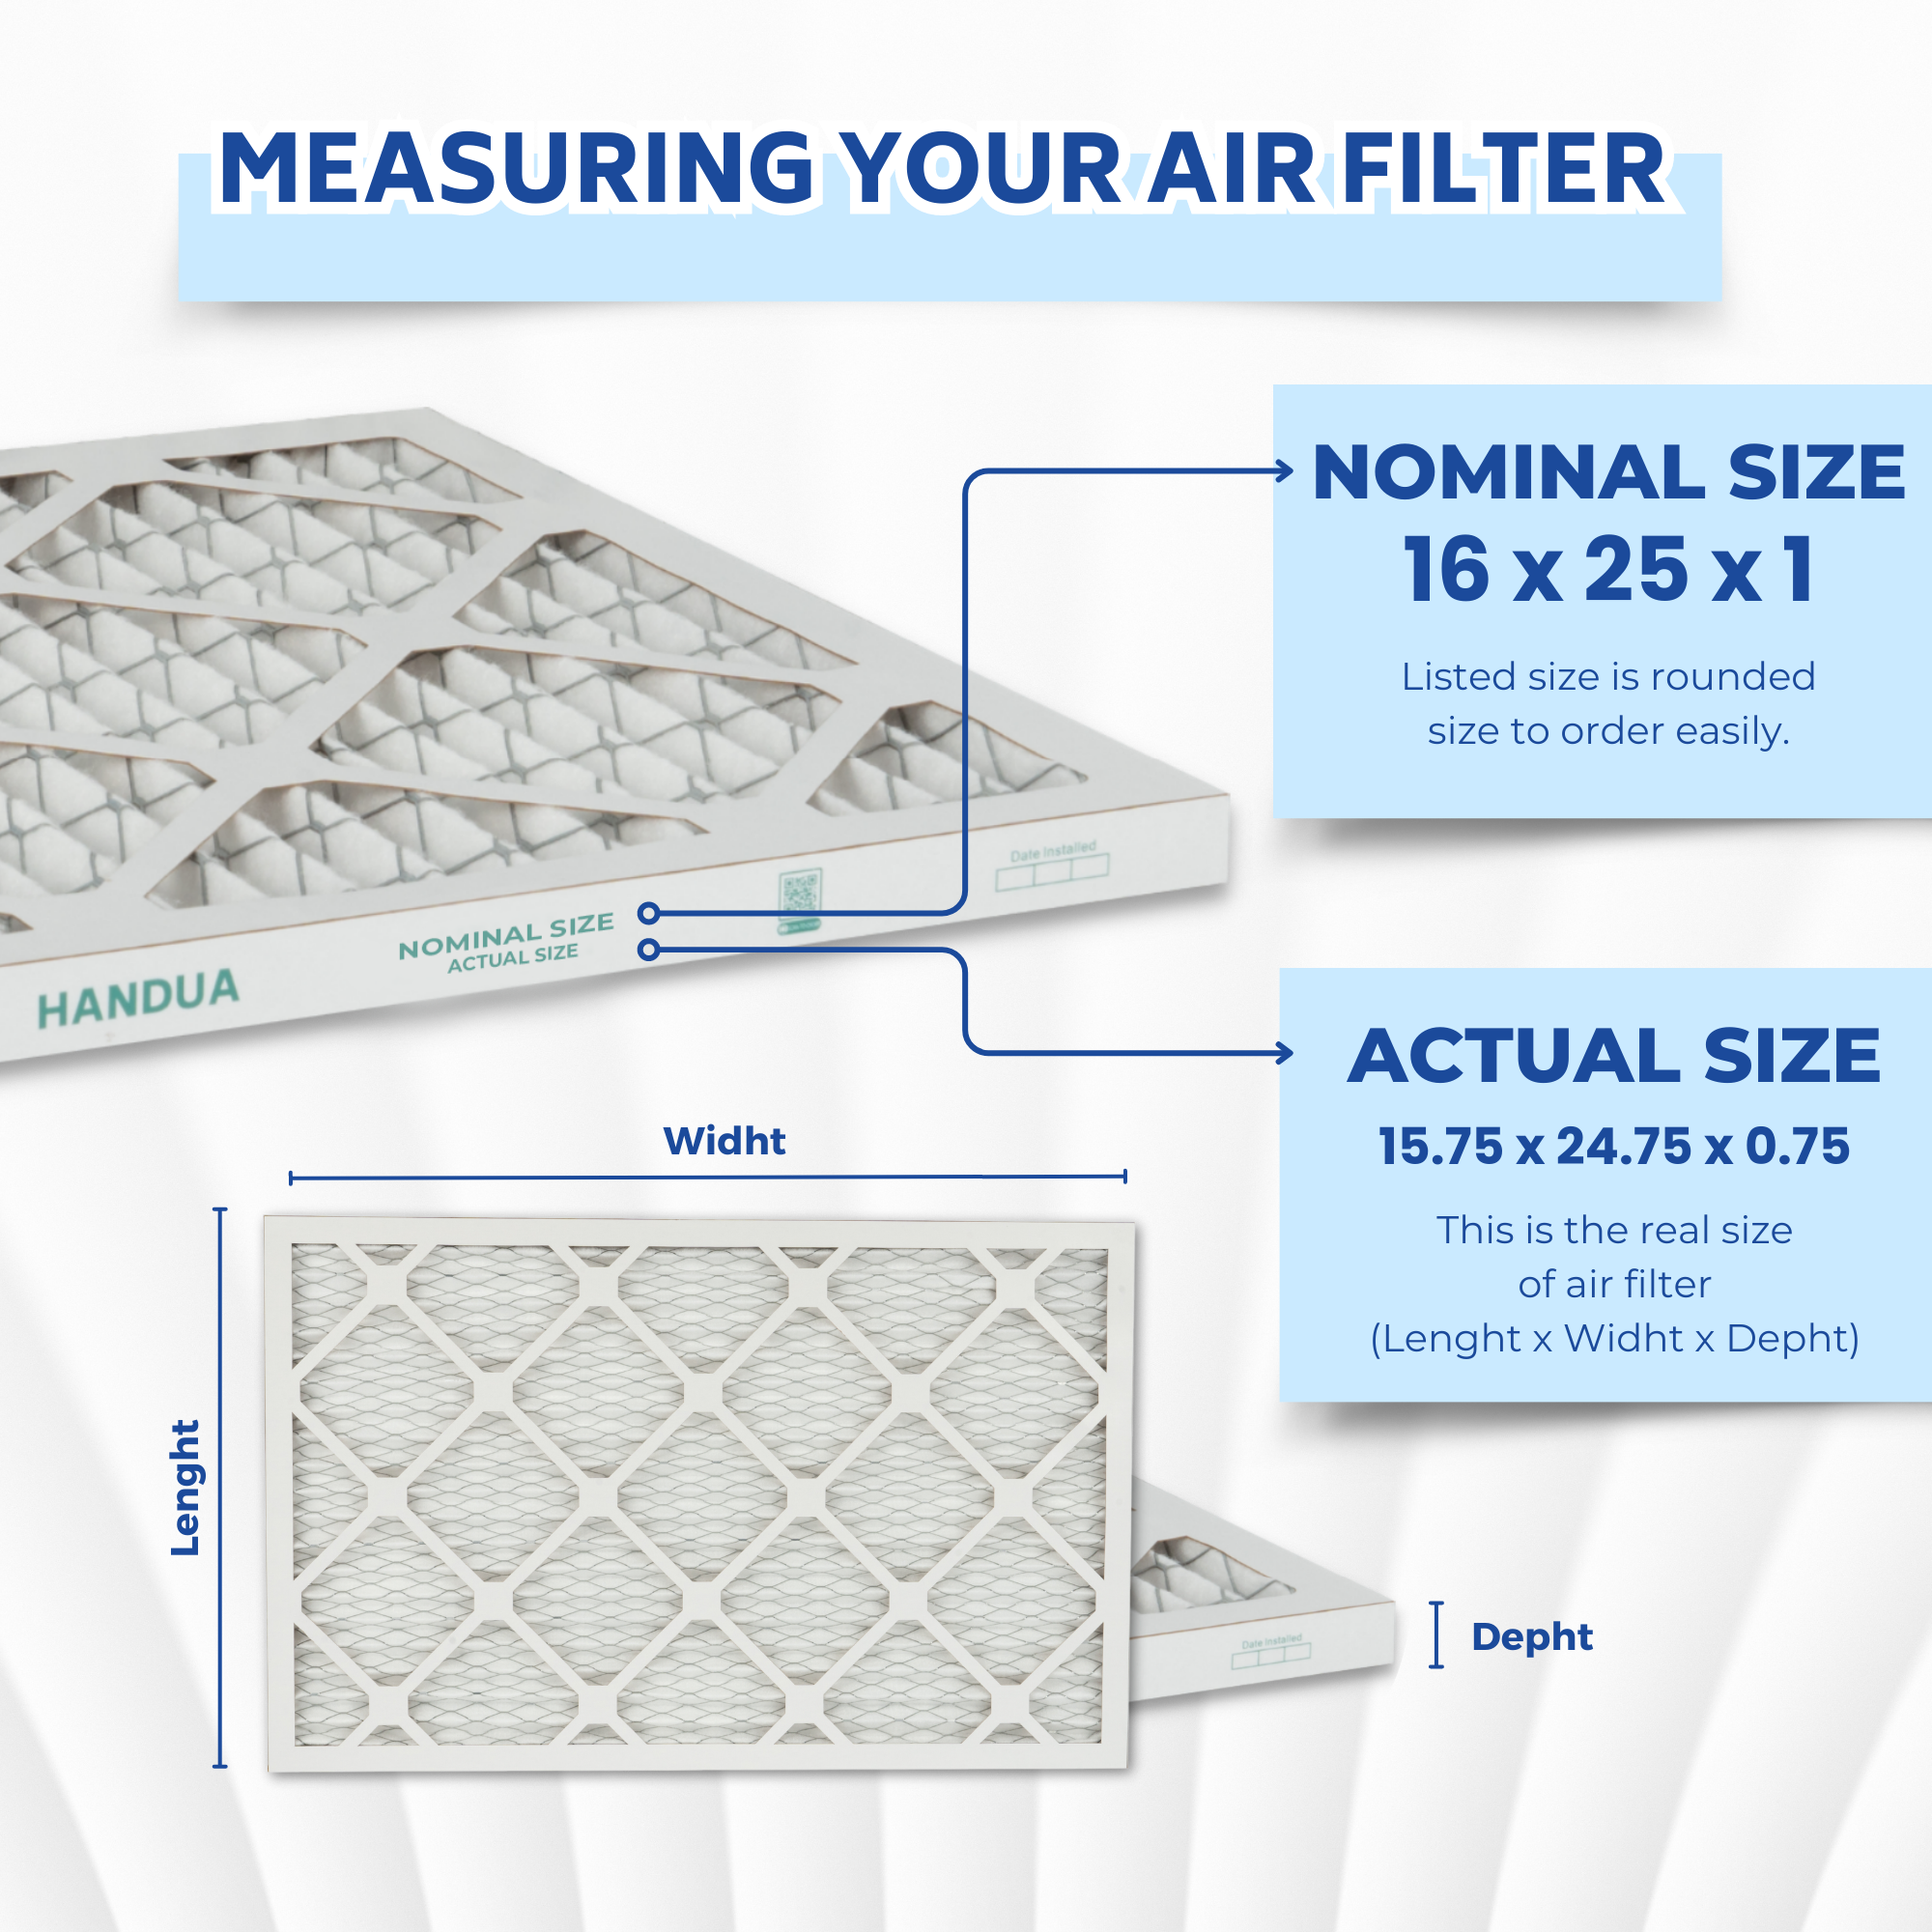 Handua 16x25x1 Air Filter MERV 13 Optimal Control, Plated Furnace AC Air Replacement Filter, 4 Pack (Actual Size: 15.75" x 24.75" x 0.75")